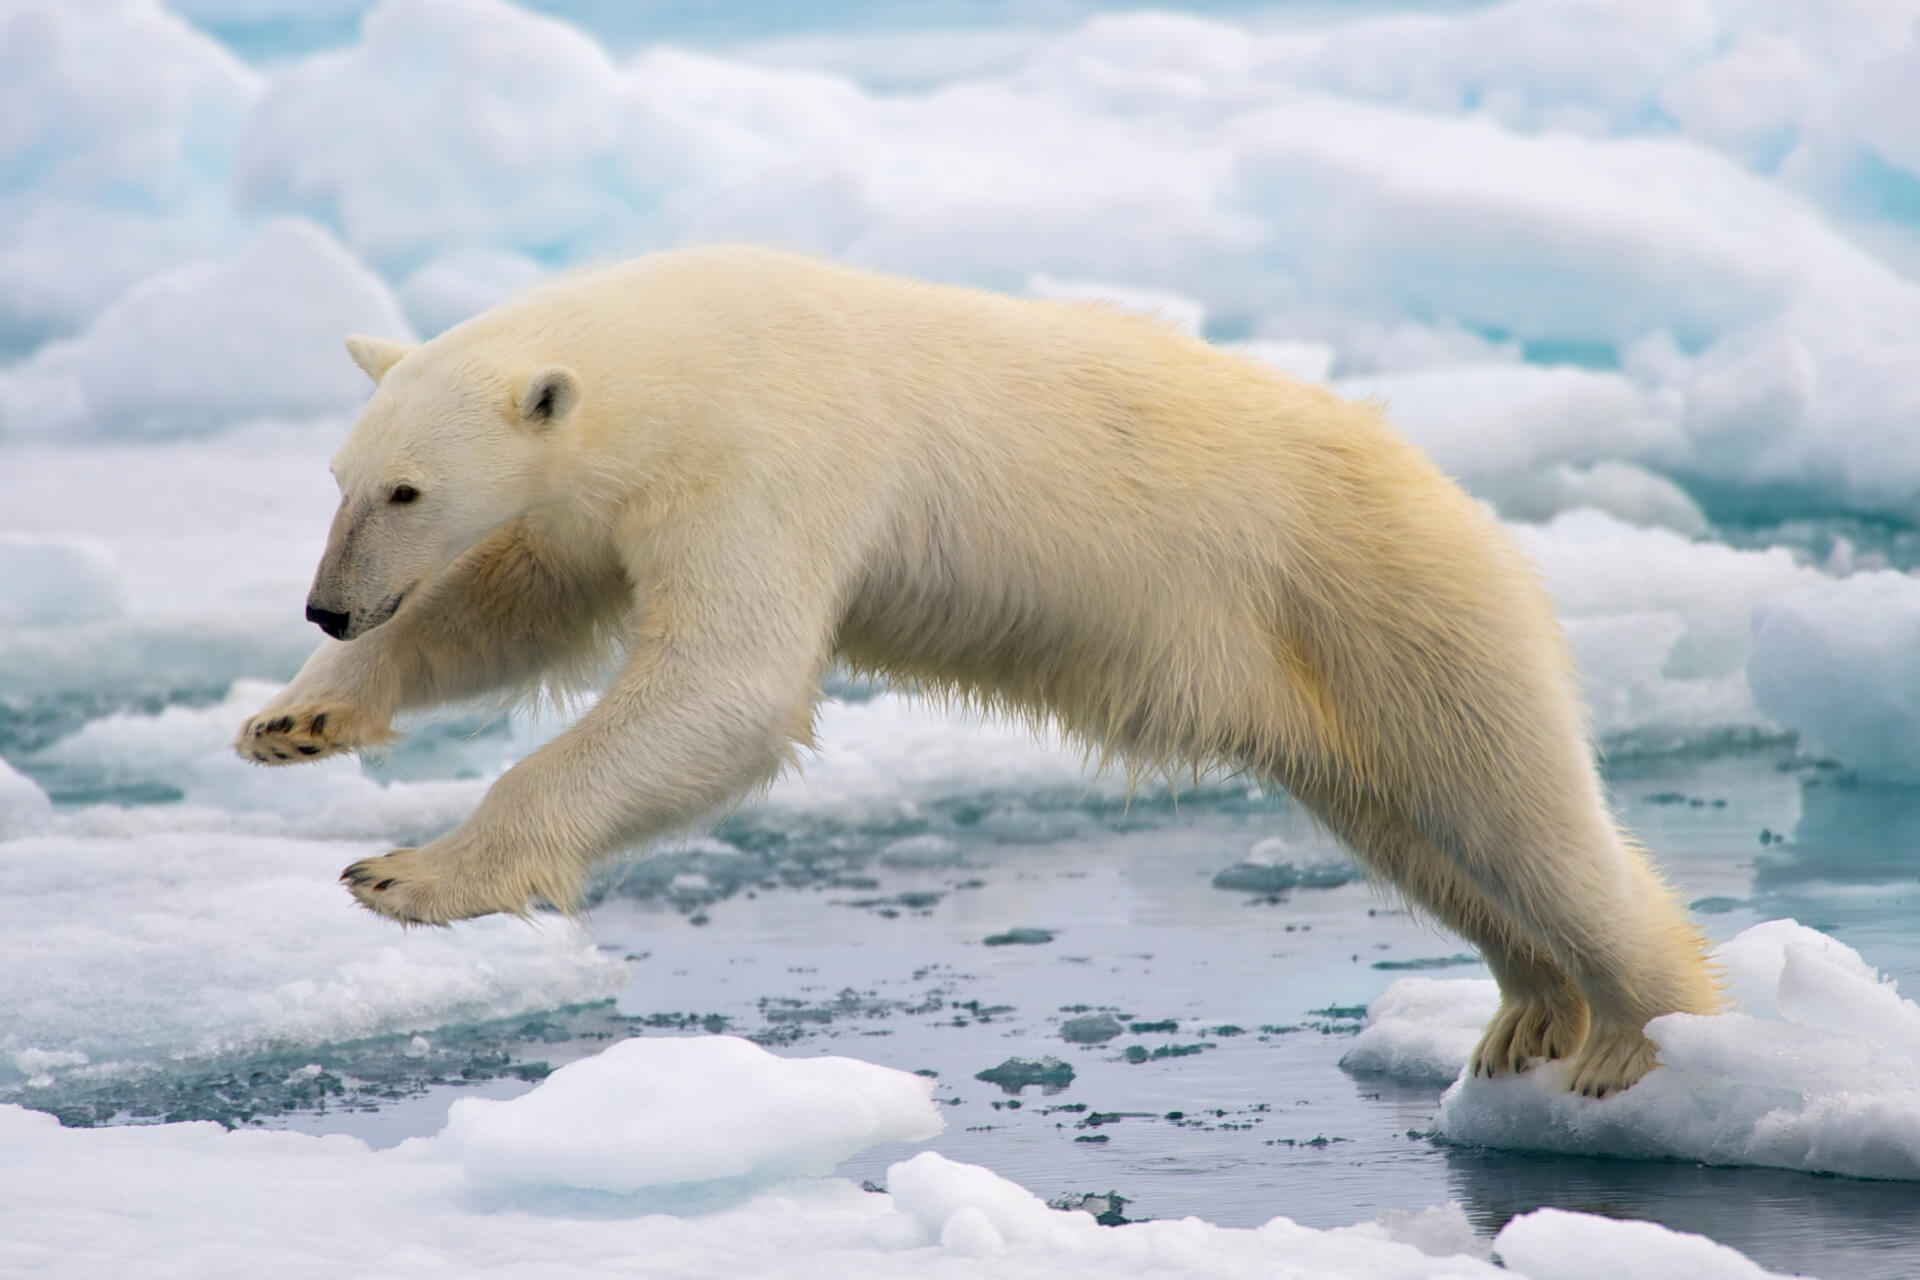 The polar bears are thriving (despite what David Attenborough says!) (newbraveworld.org)